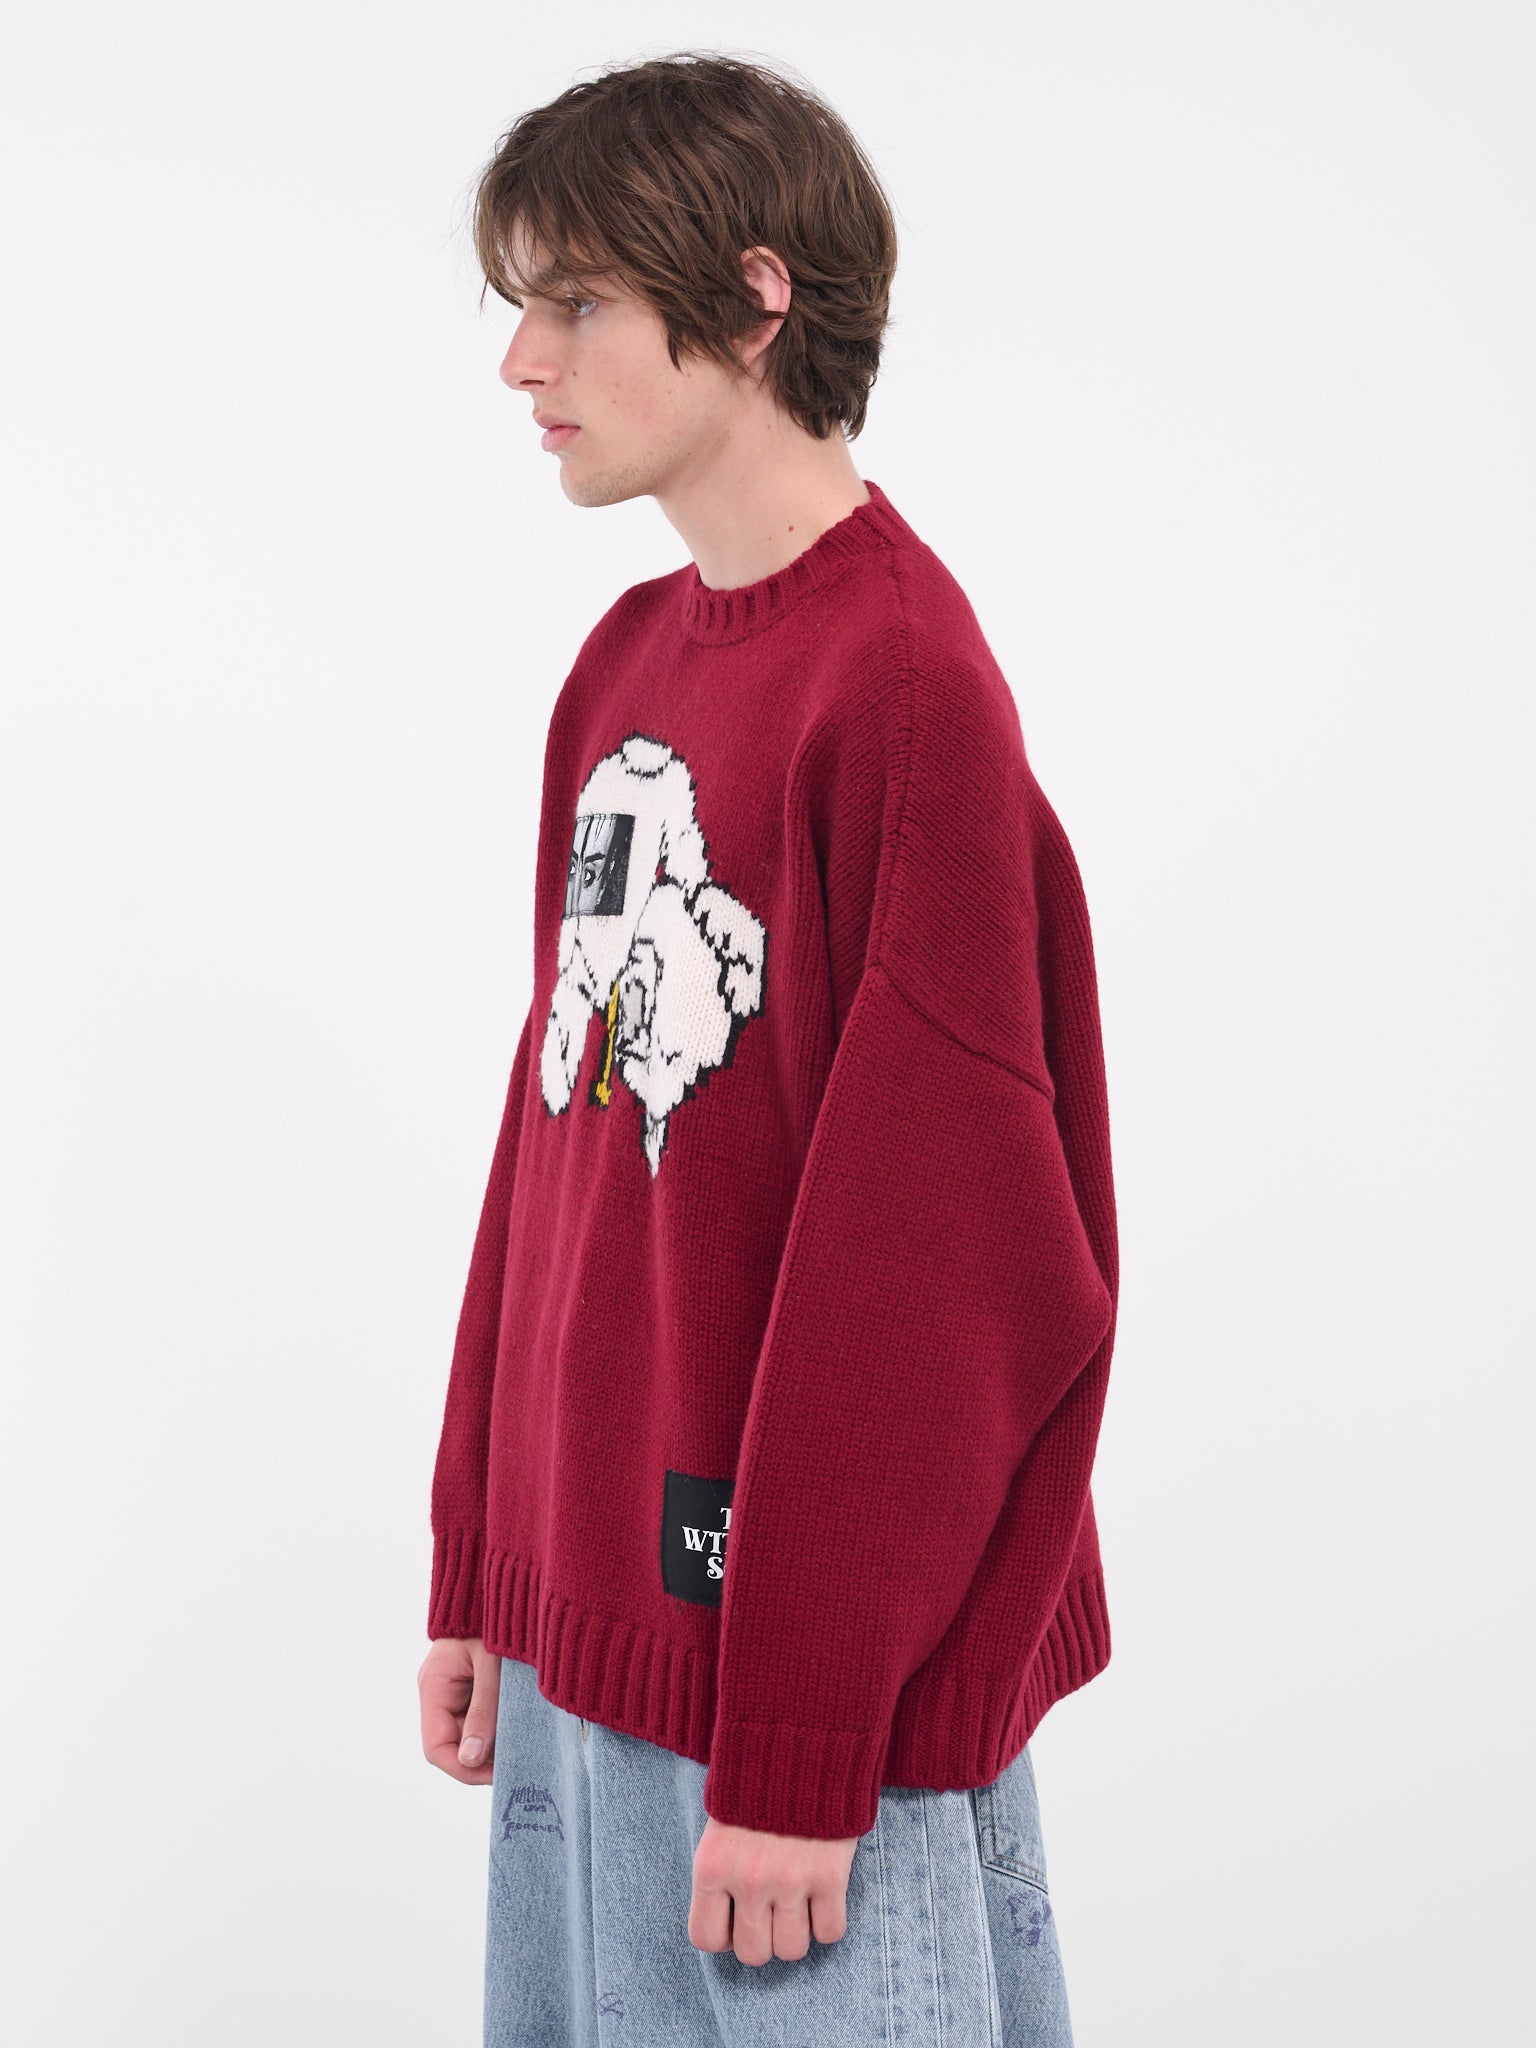 Soulless Toy Sweater (UC2C4915-1-BORDEAUX)